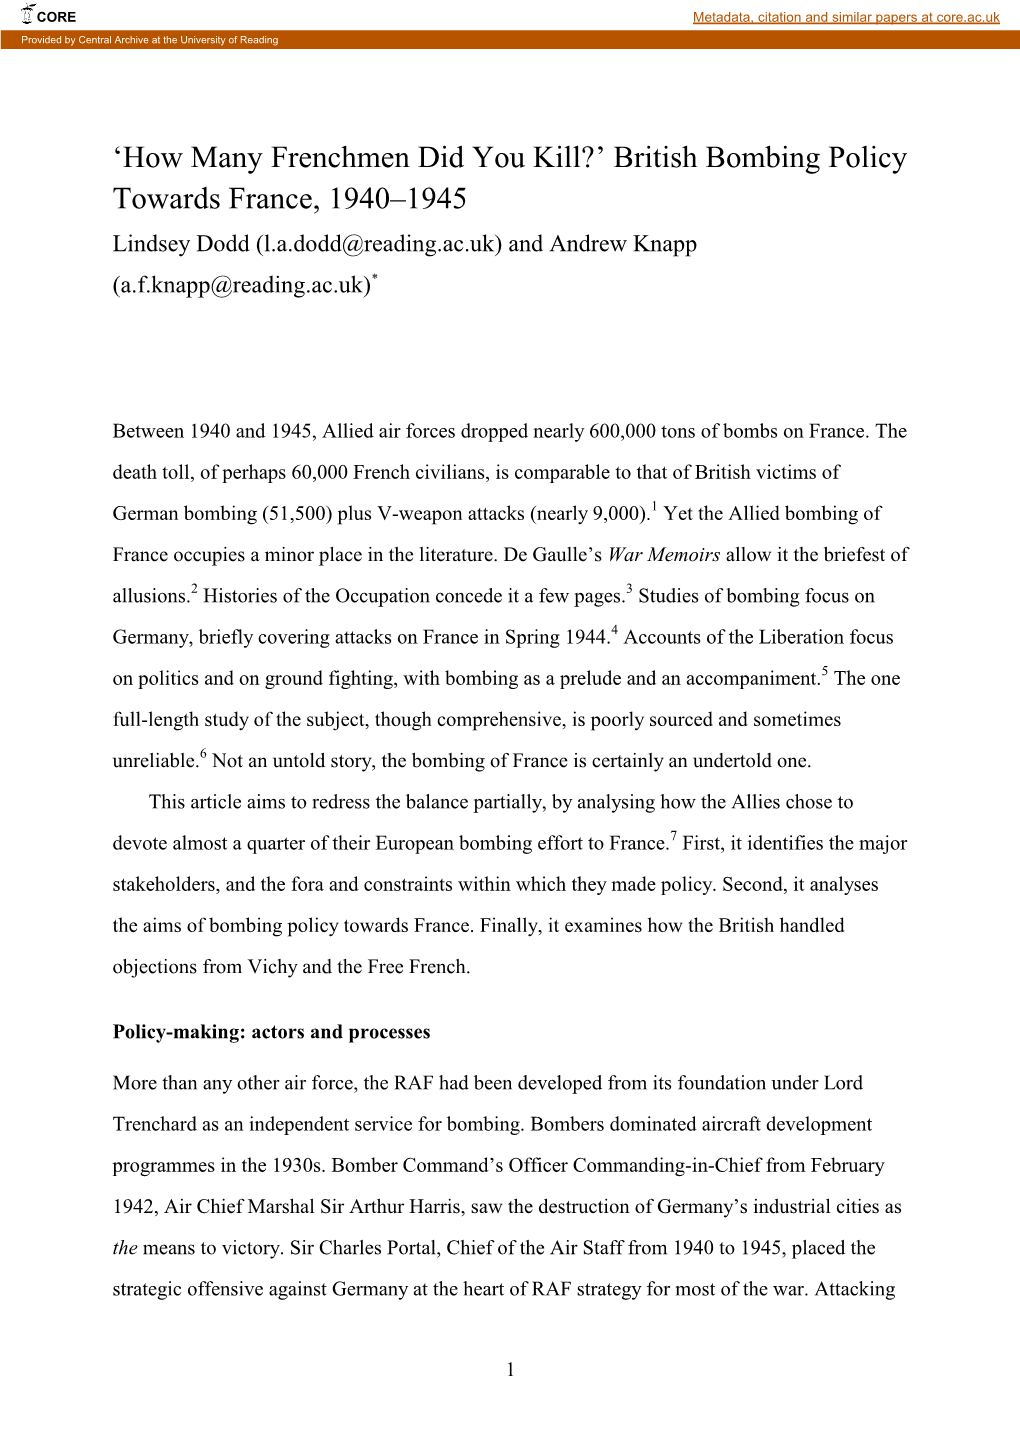 British Bombing Policy Towards France, 1940–1945 Lindsey Dodd (L.A.Dodd@Reading.Ac.Uk) and Andrew Knapp (A.F.Knapp@Reading.Ac.Uk)*